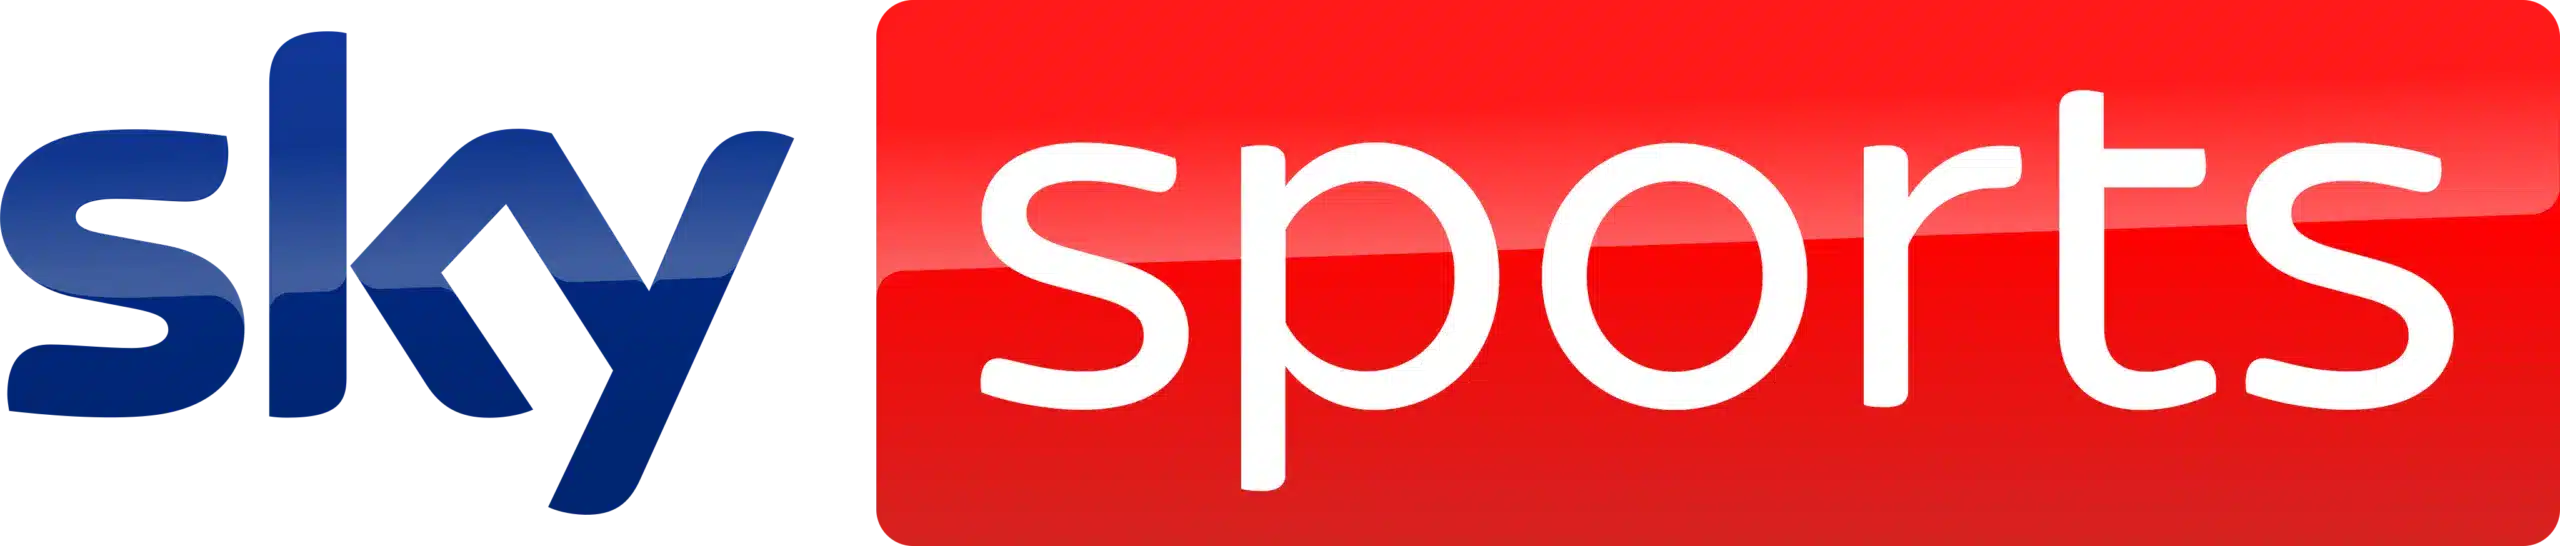 sky-sports-logo-5-1.webp